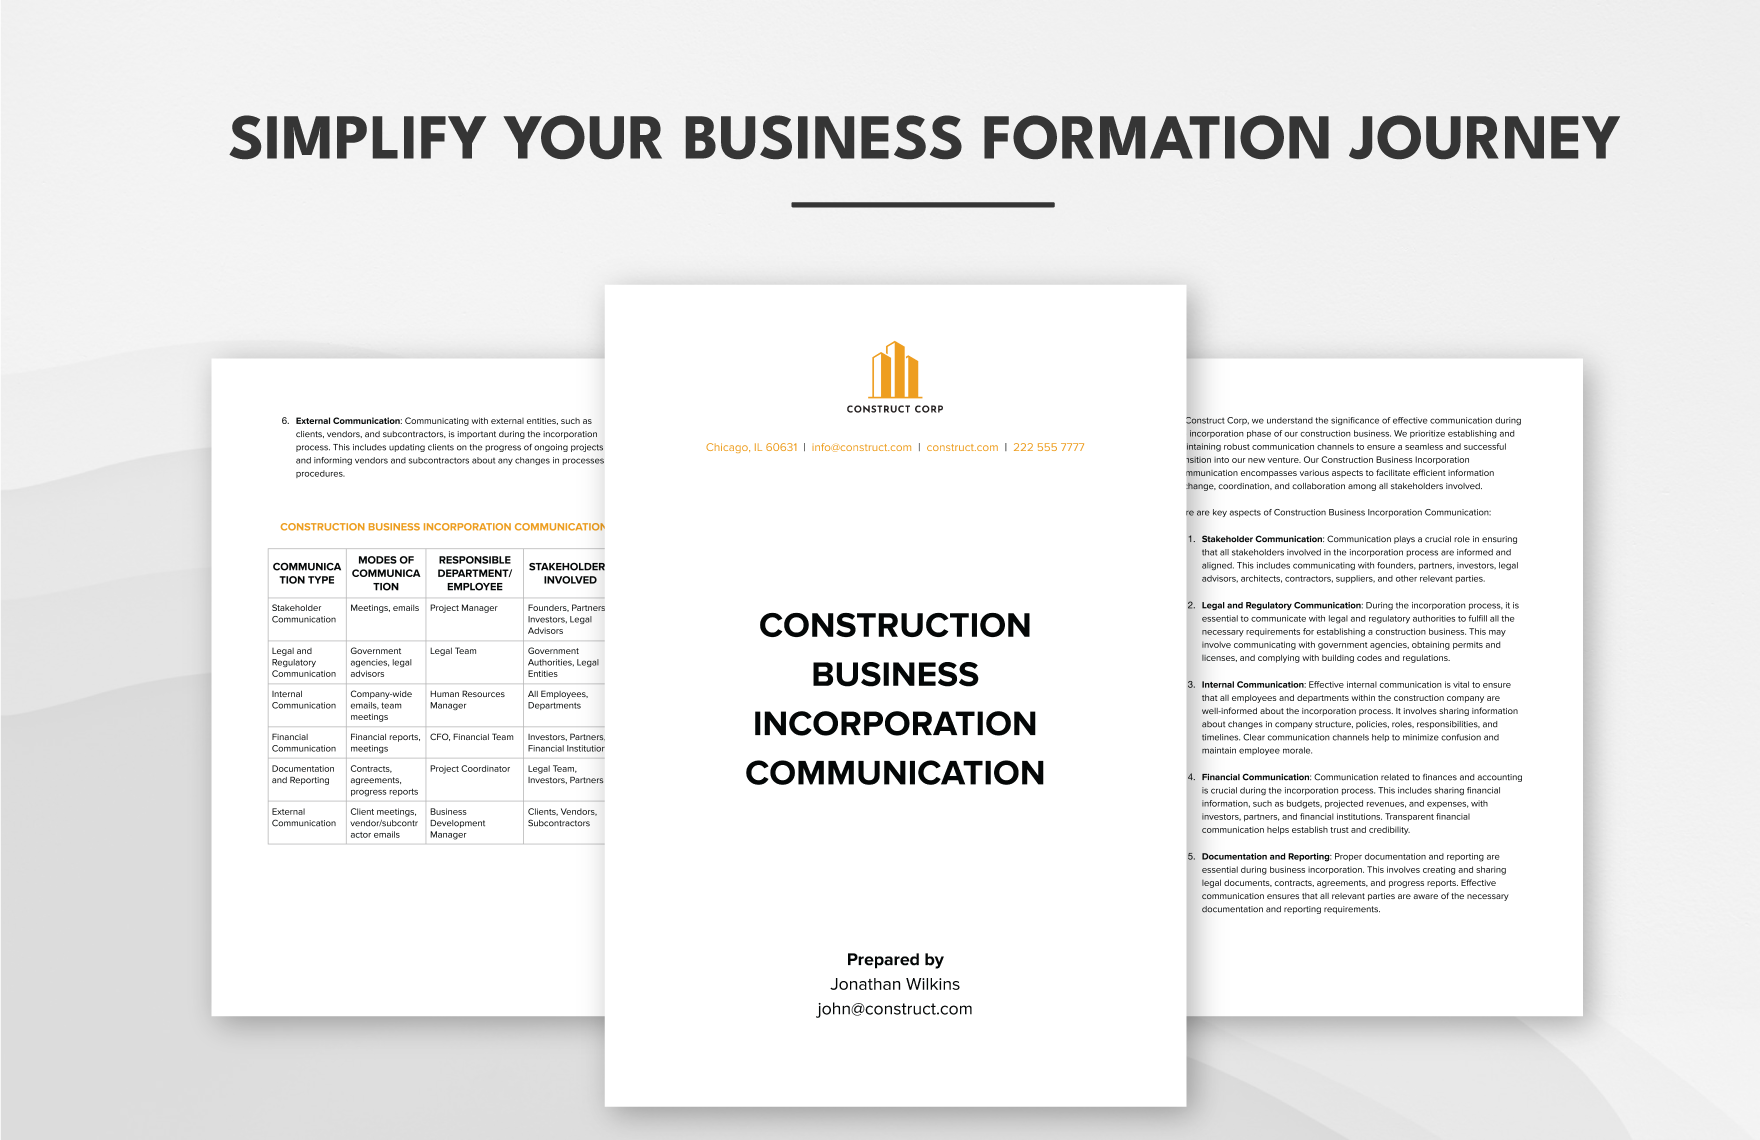 Construction Business Incorporation Communication Template